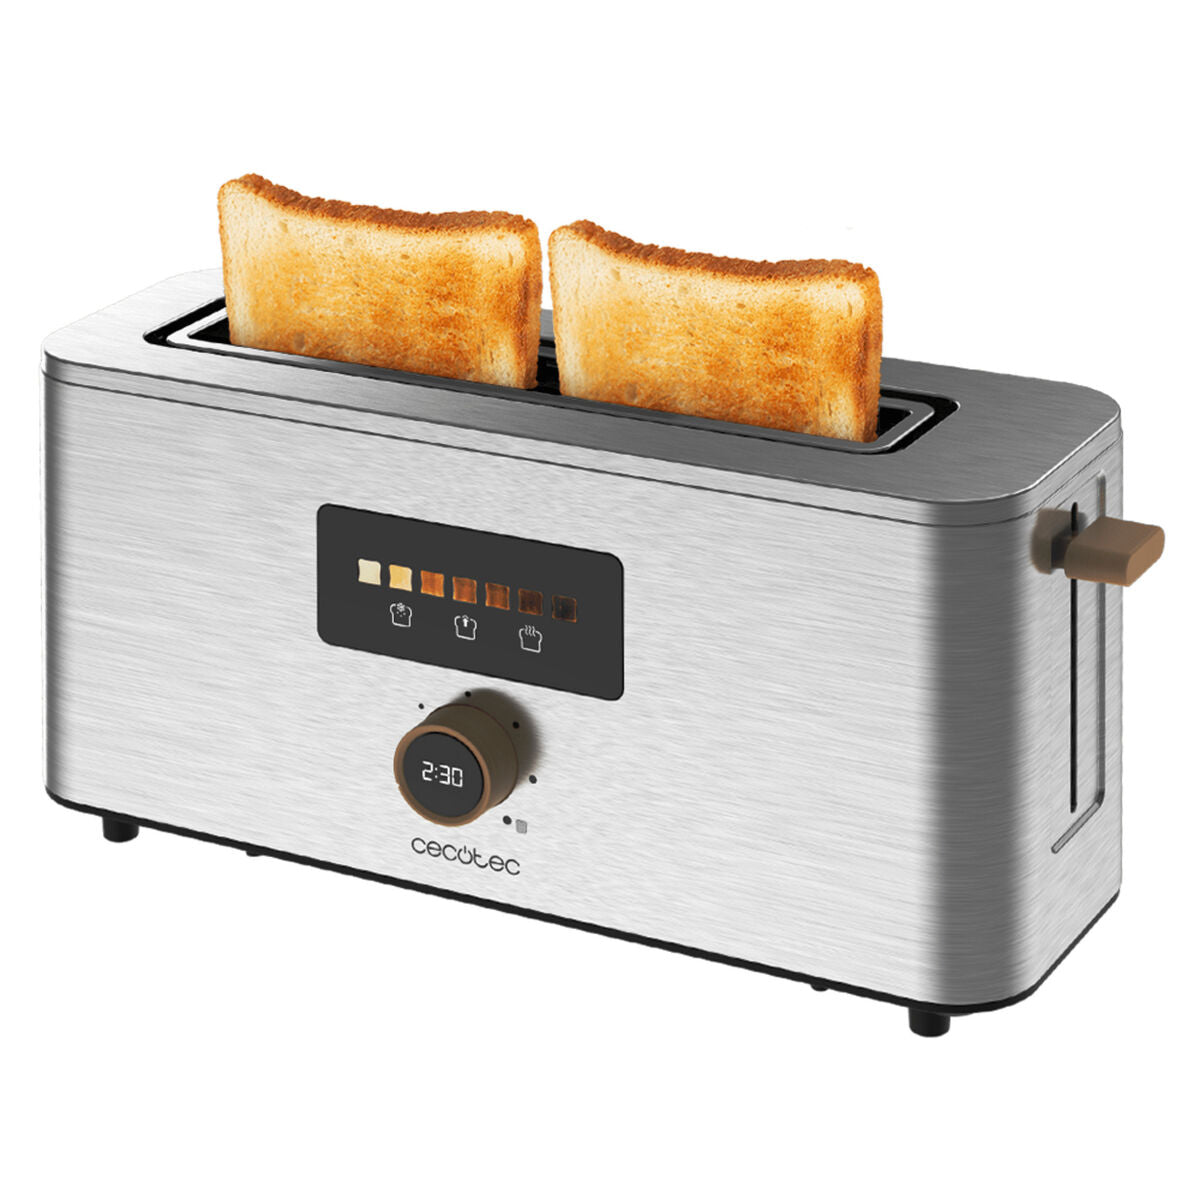 Kaufe Toaster Cecotec Touch&Toast Extra 1000 W bei AWK Flagship um € 68.00